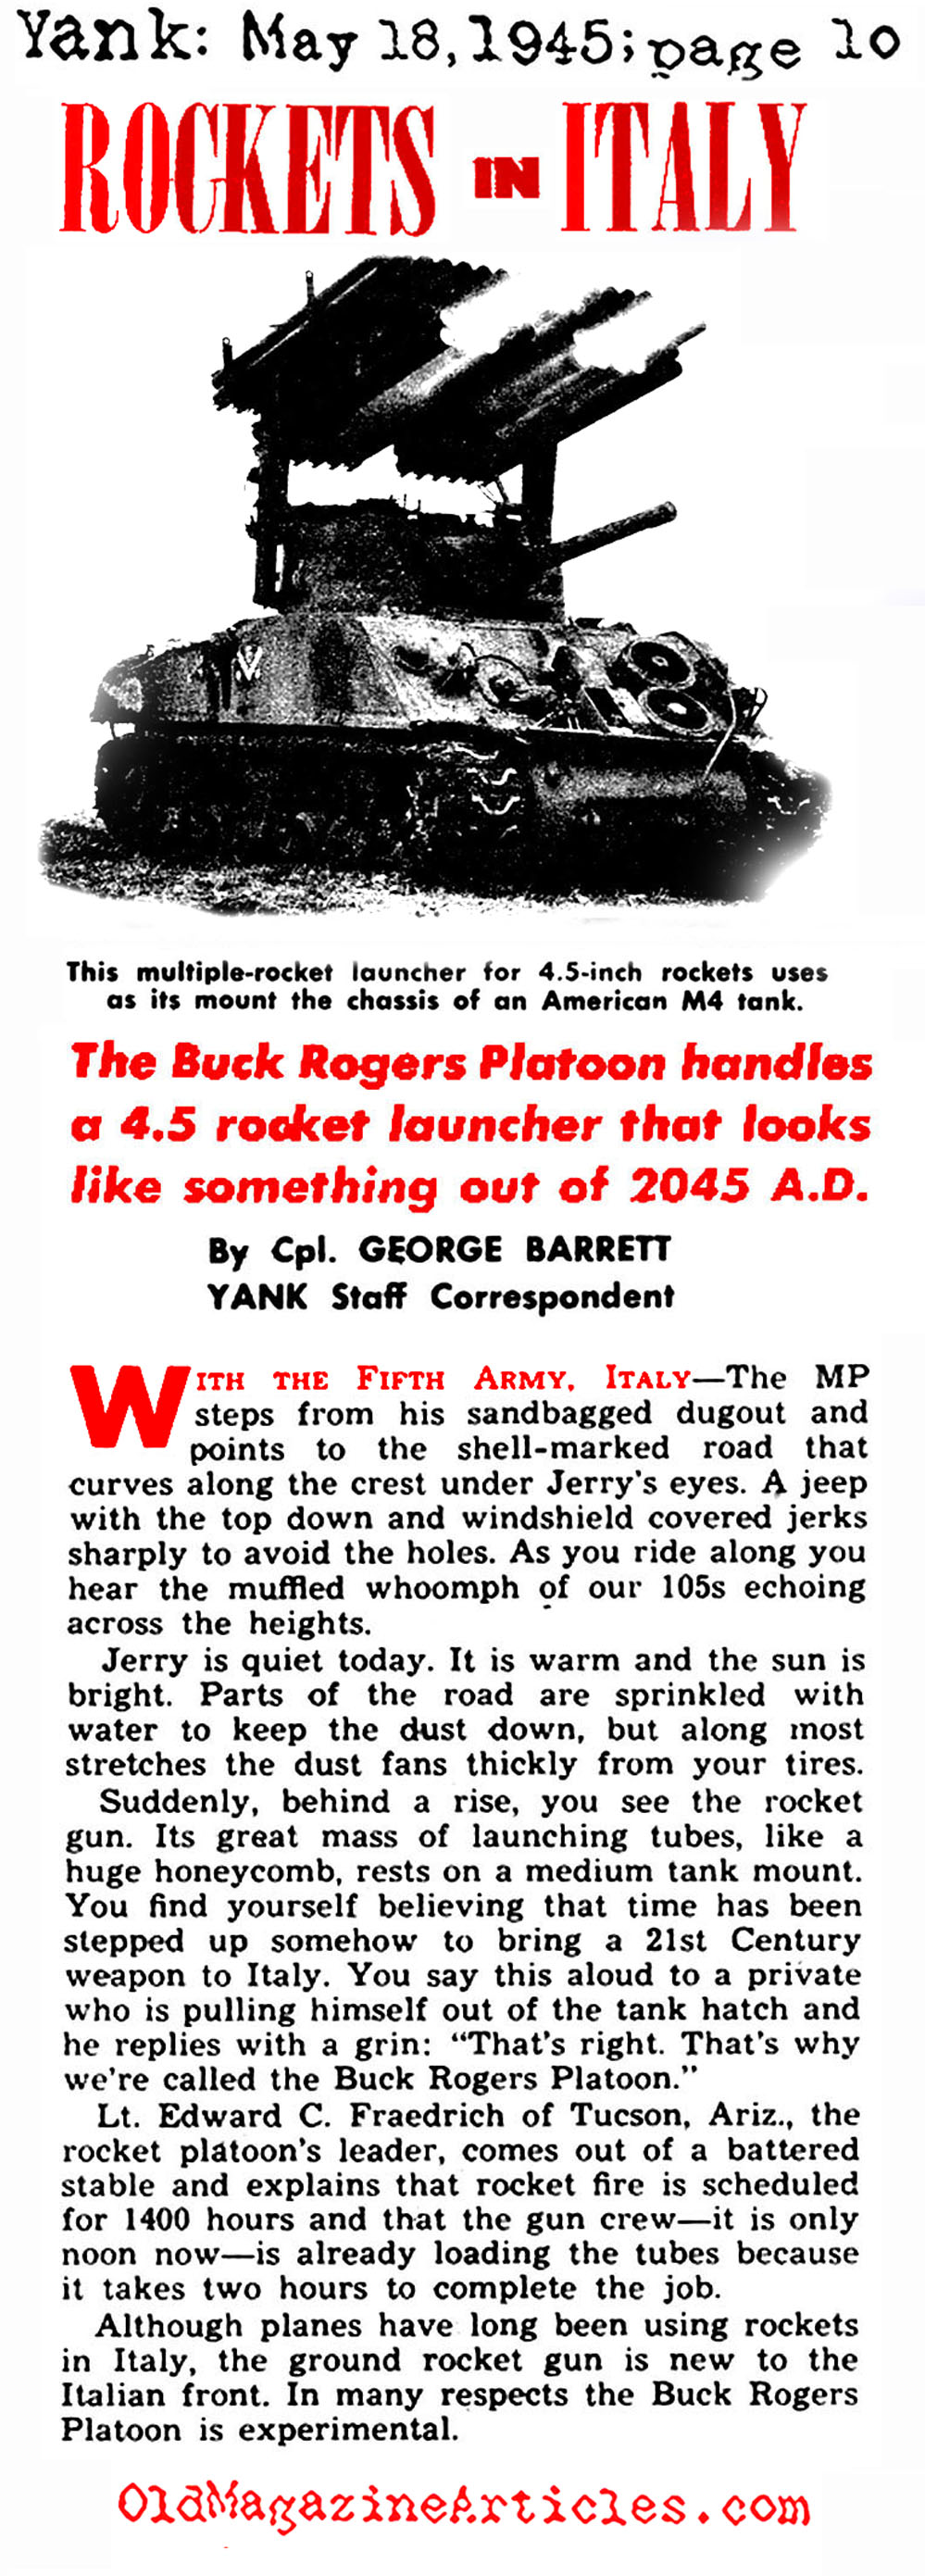 The American 4.5 Multiple Rocket Launcher (Yank Magazine, 1945)